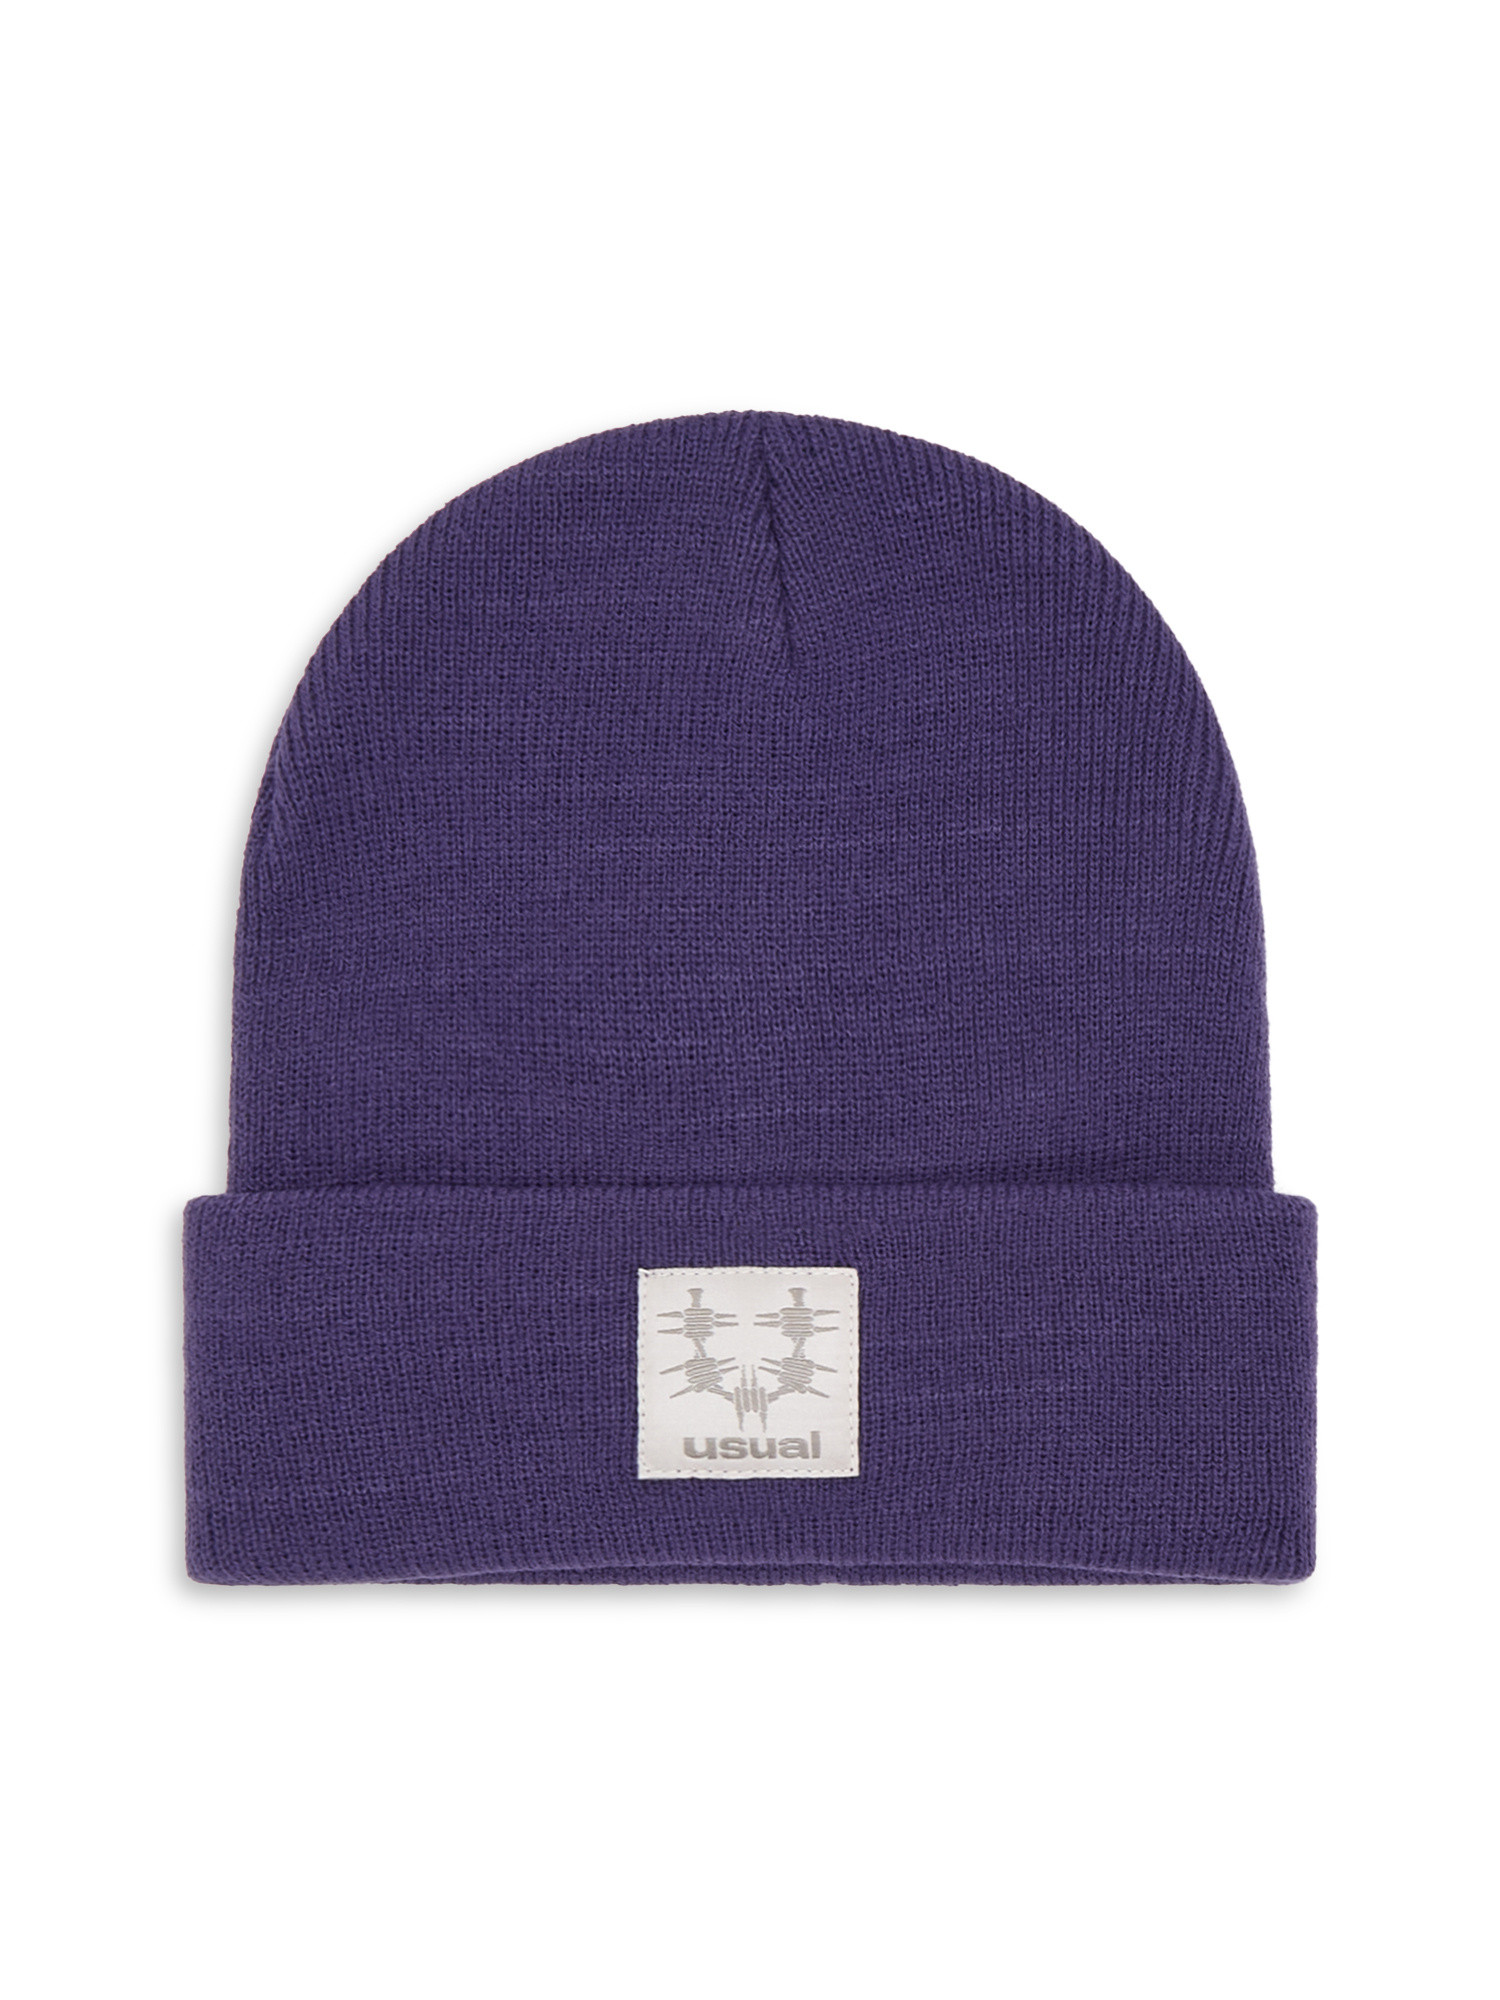 Usual шапка-бини OG, фиолетовый зимняя шапка бини для мужчин вязаная шапка толстая шерстяная шапка шарф для мужчин и женщин балаклава шапка маска набор шапок 2022